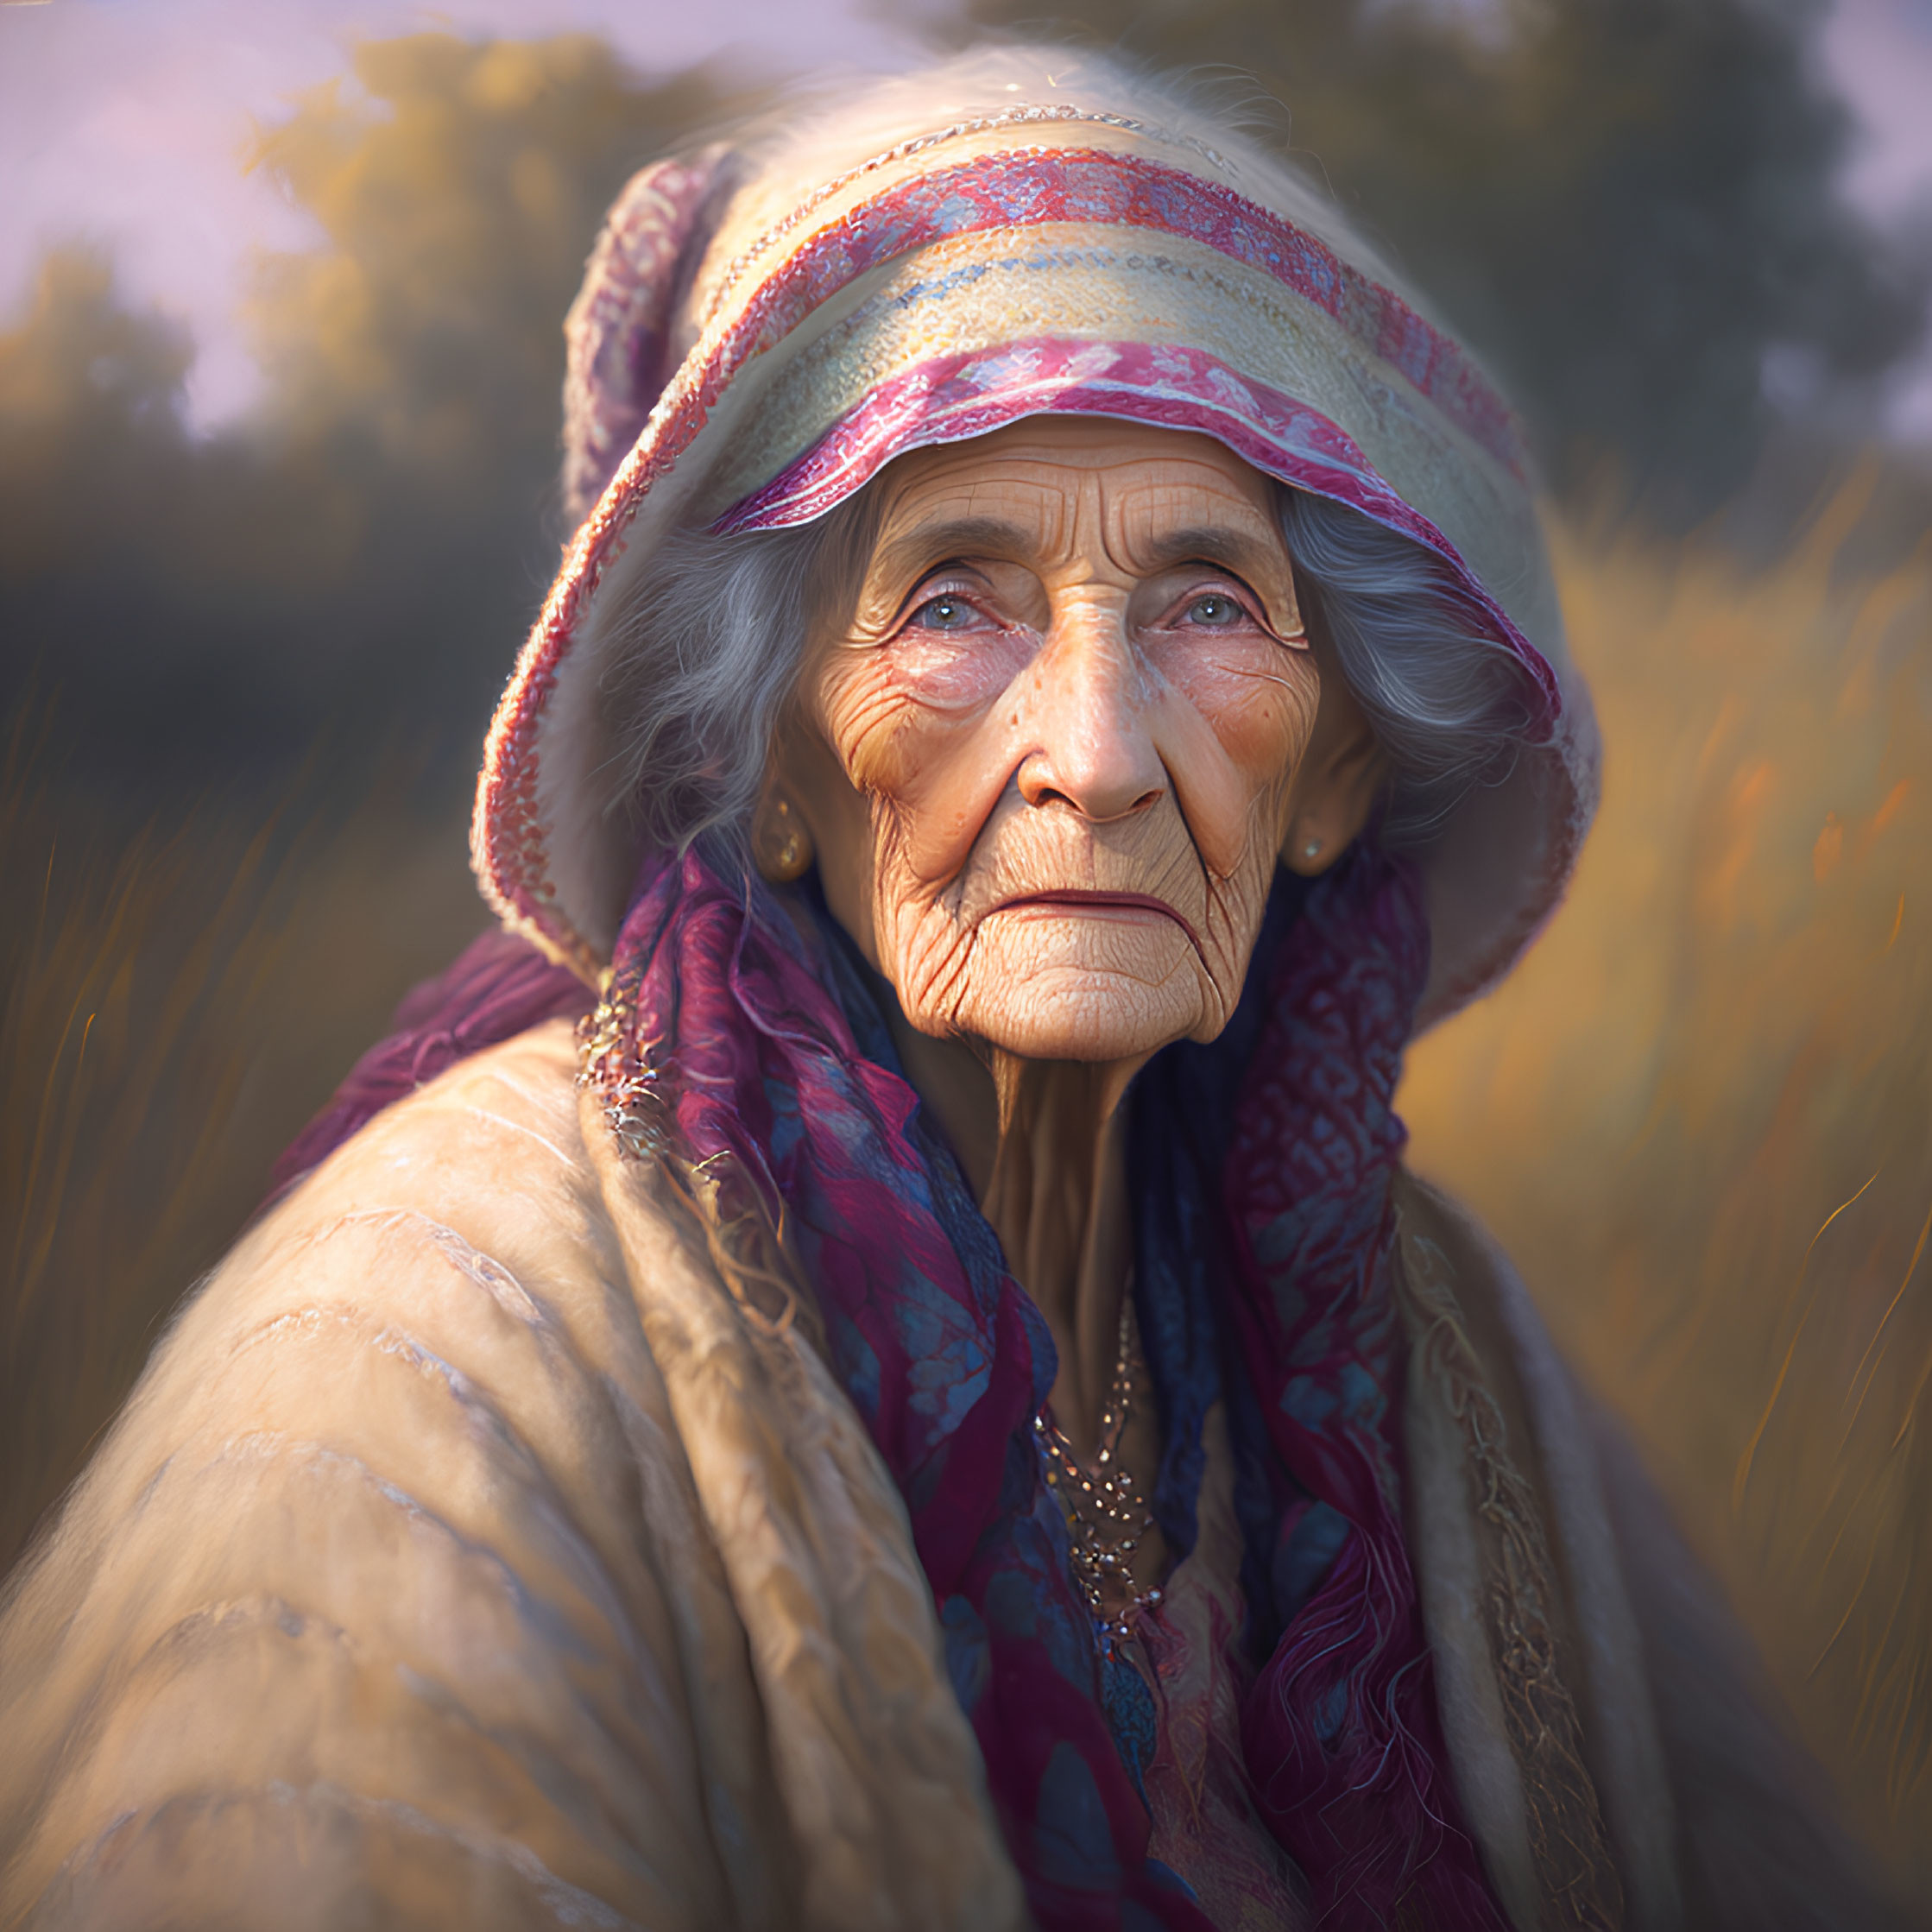 Elderly woman with deep wrinkles in colorful headscarves in golden field